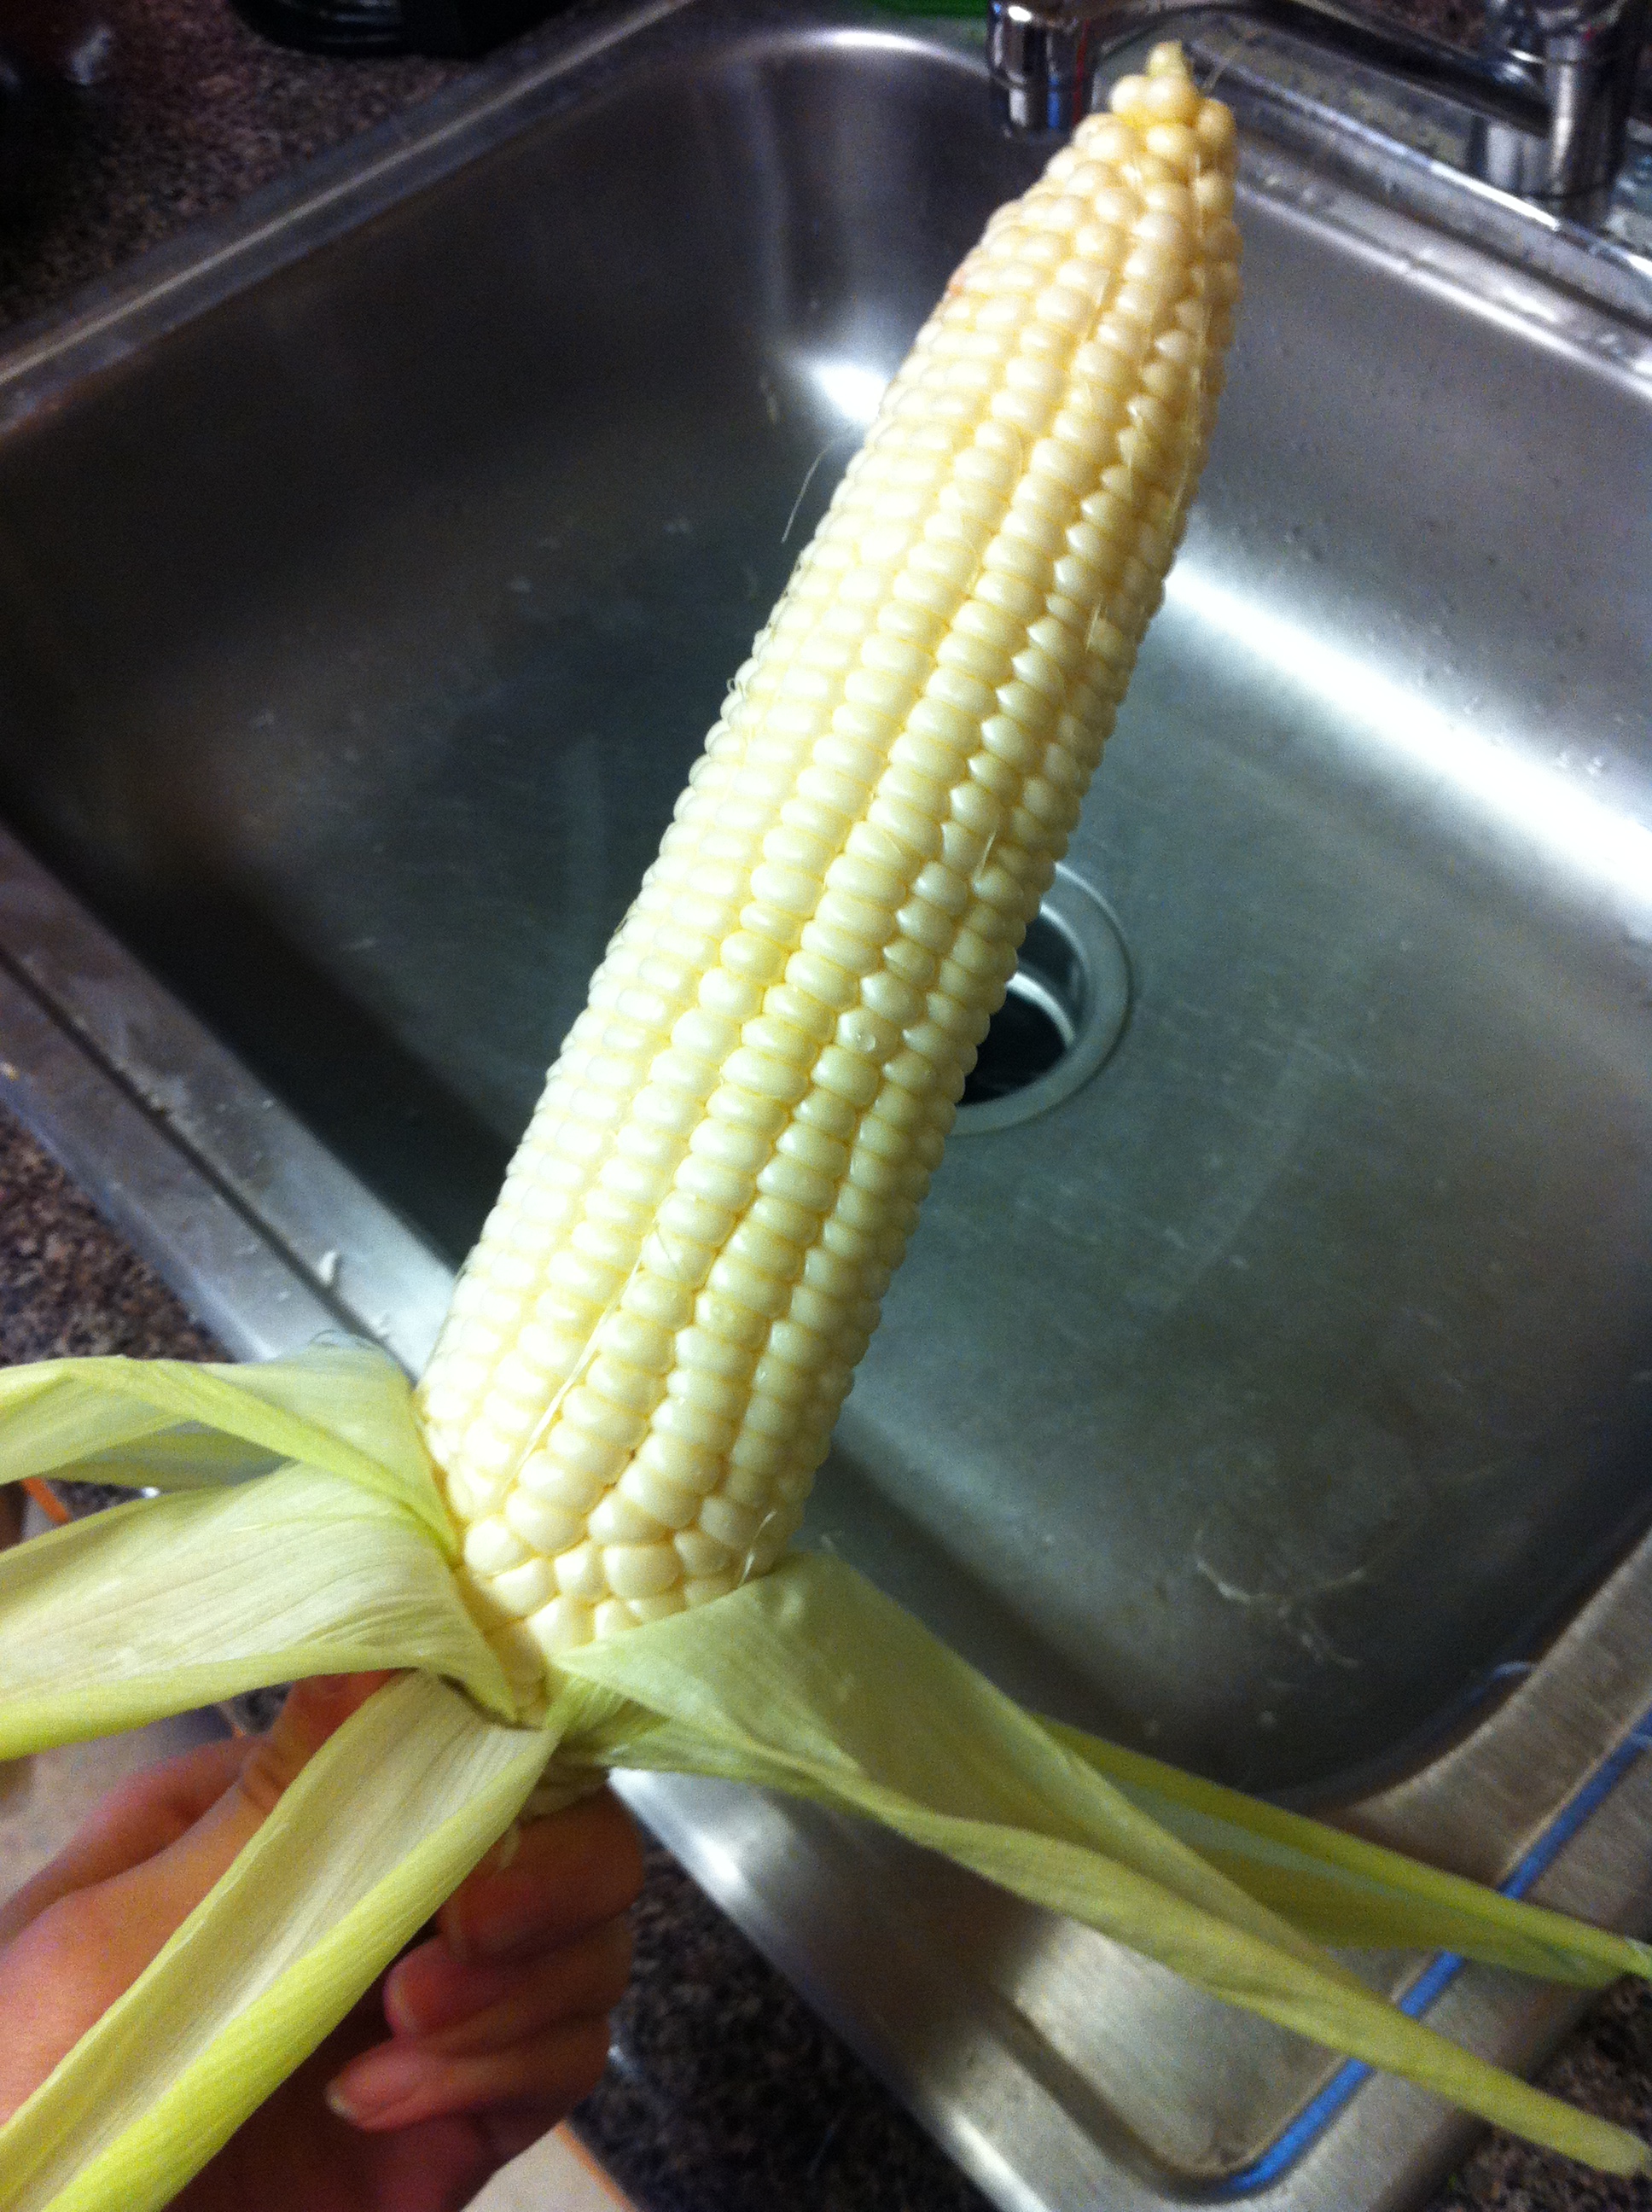 husked corn